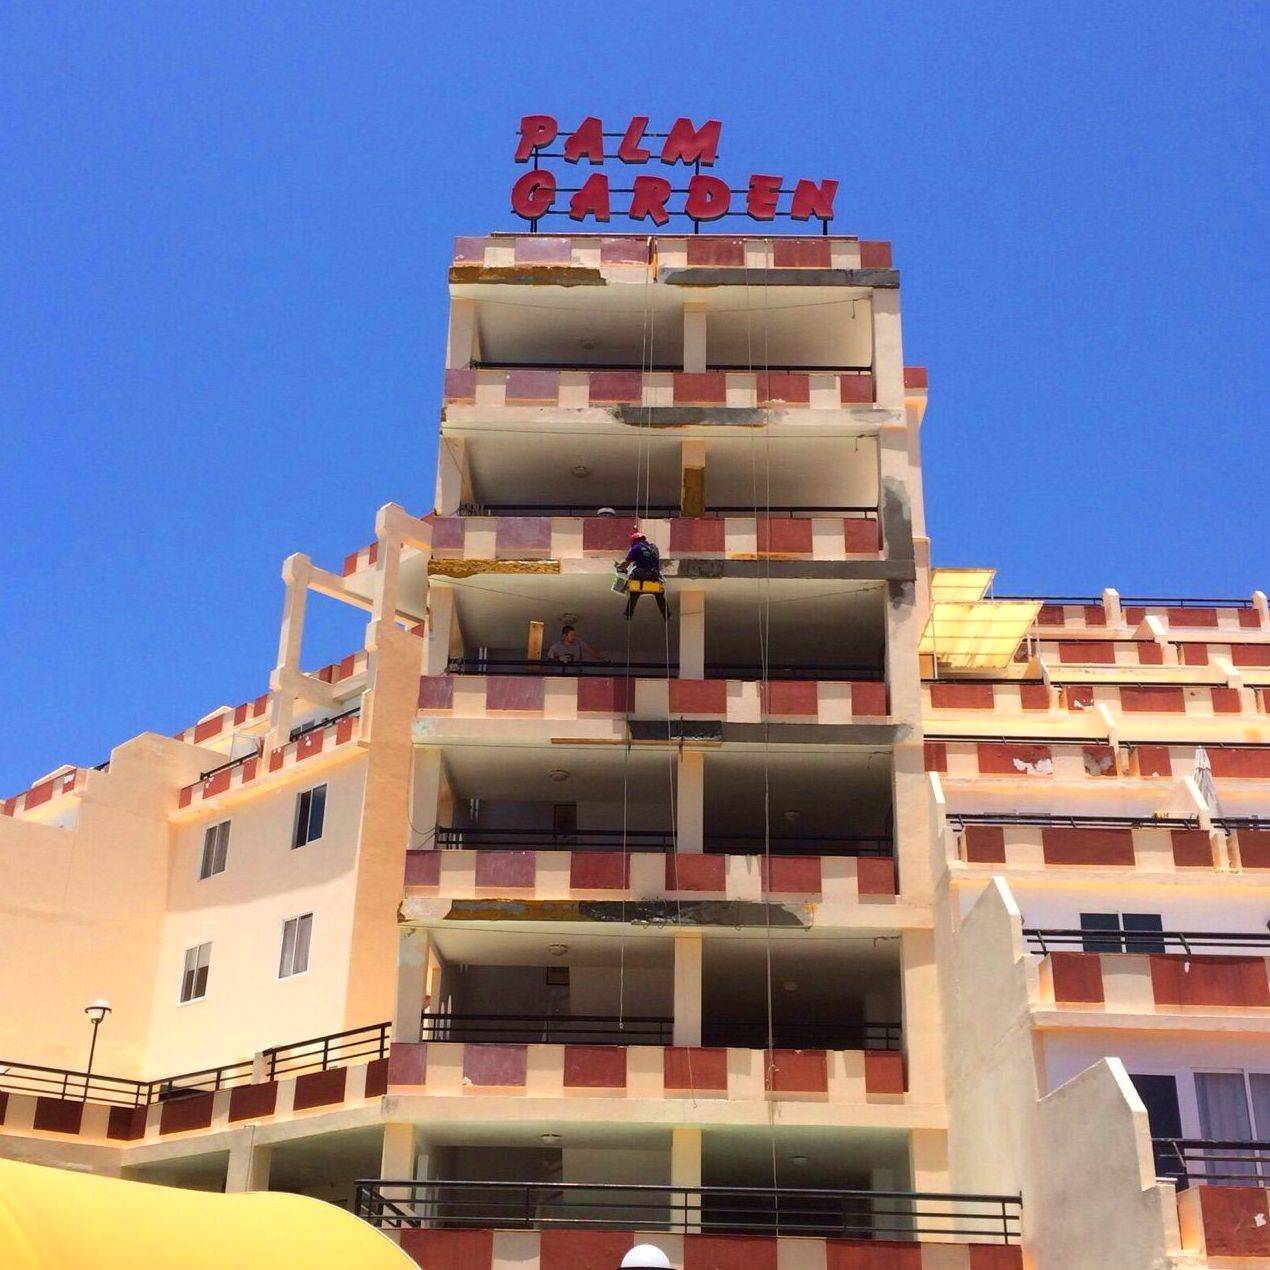 Rehabilitación y pintado de fachada (Hotel Palm Garden, Fuerteventura)